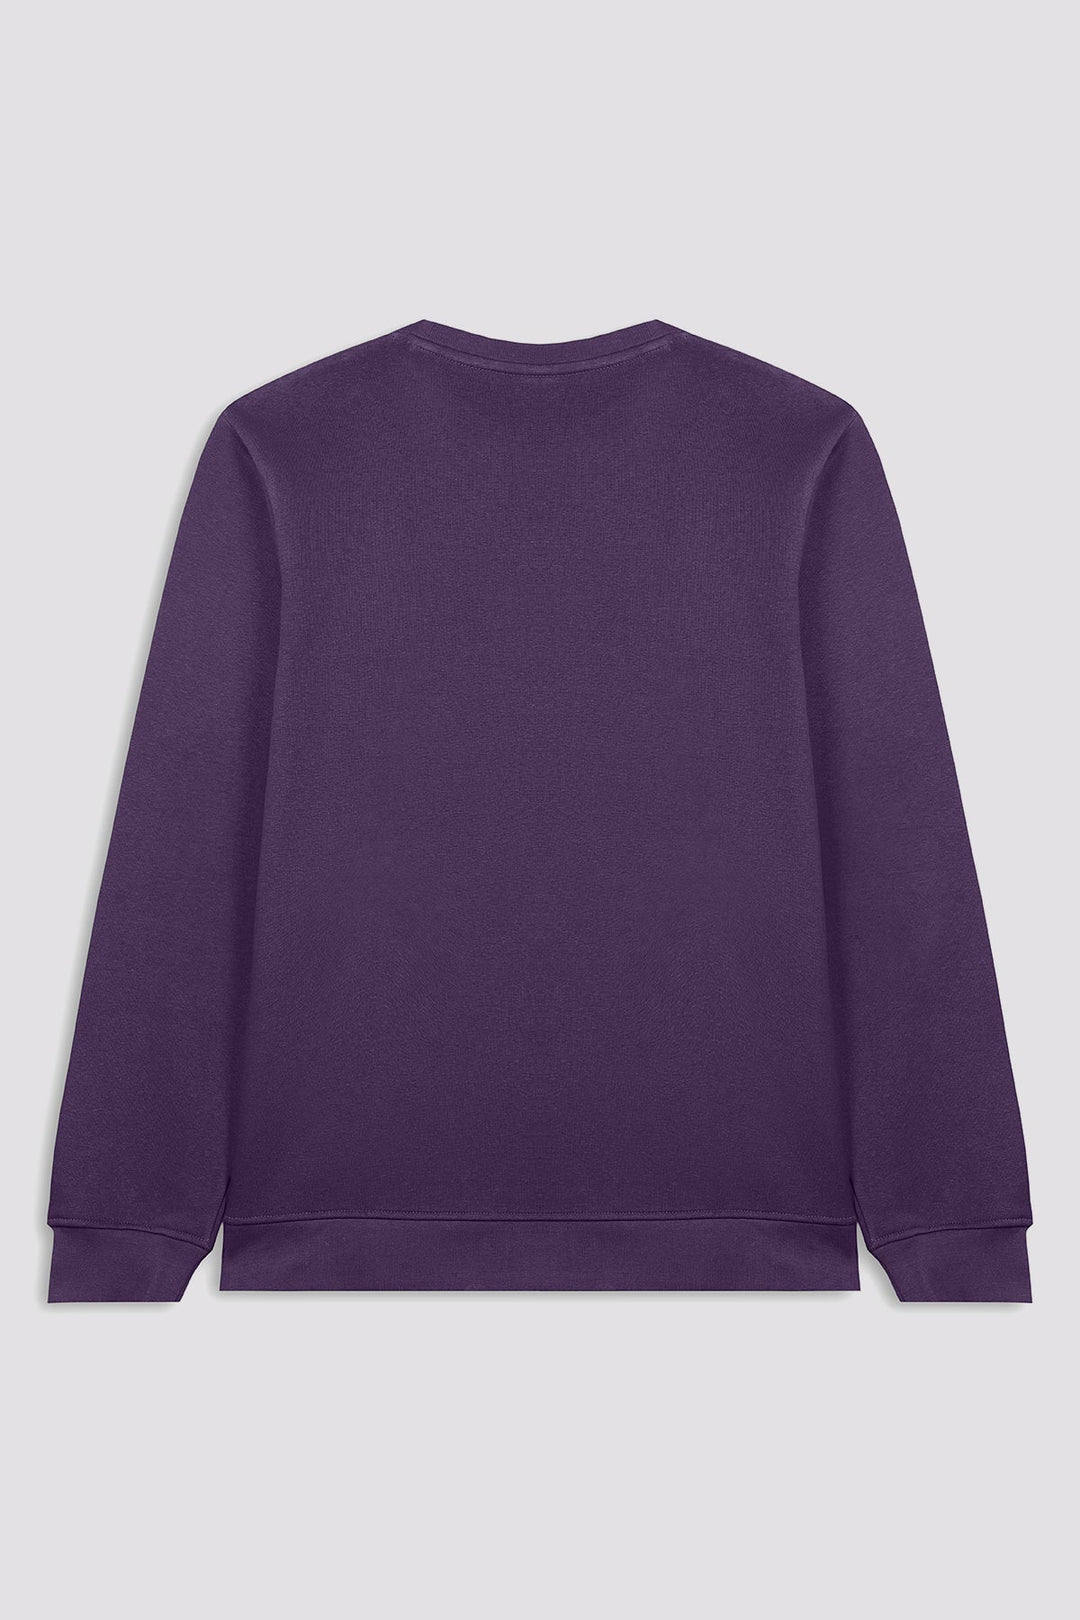 Sassy Purple Sweatshirt - W22 - WSW0034